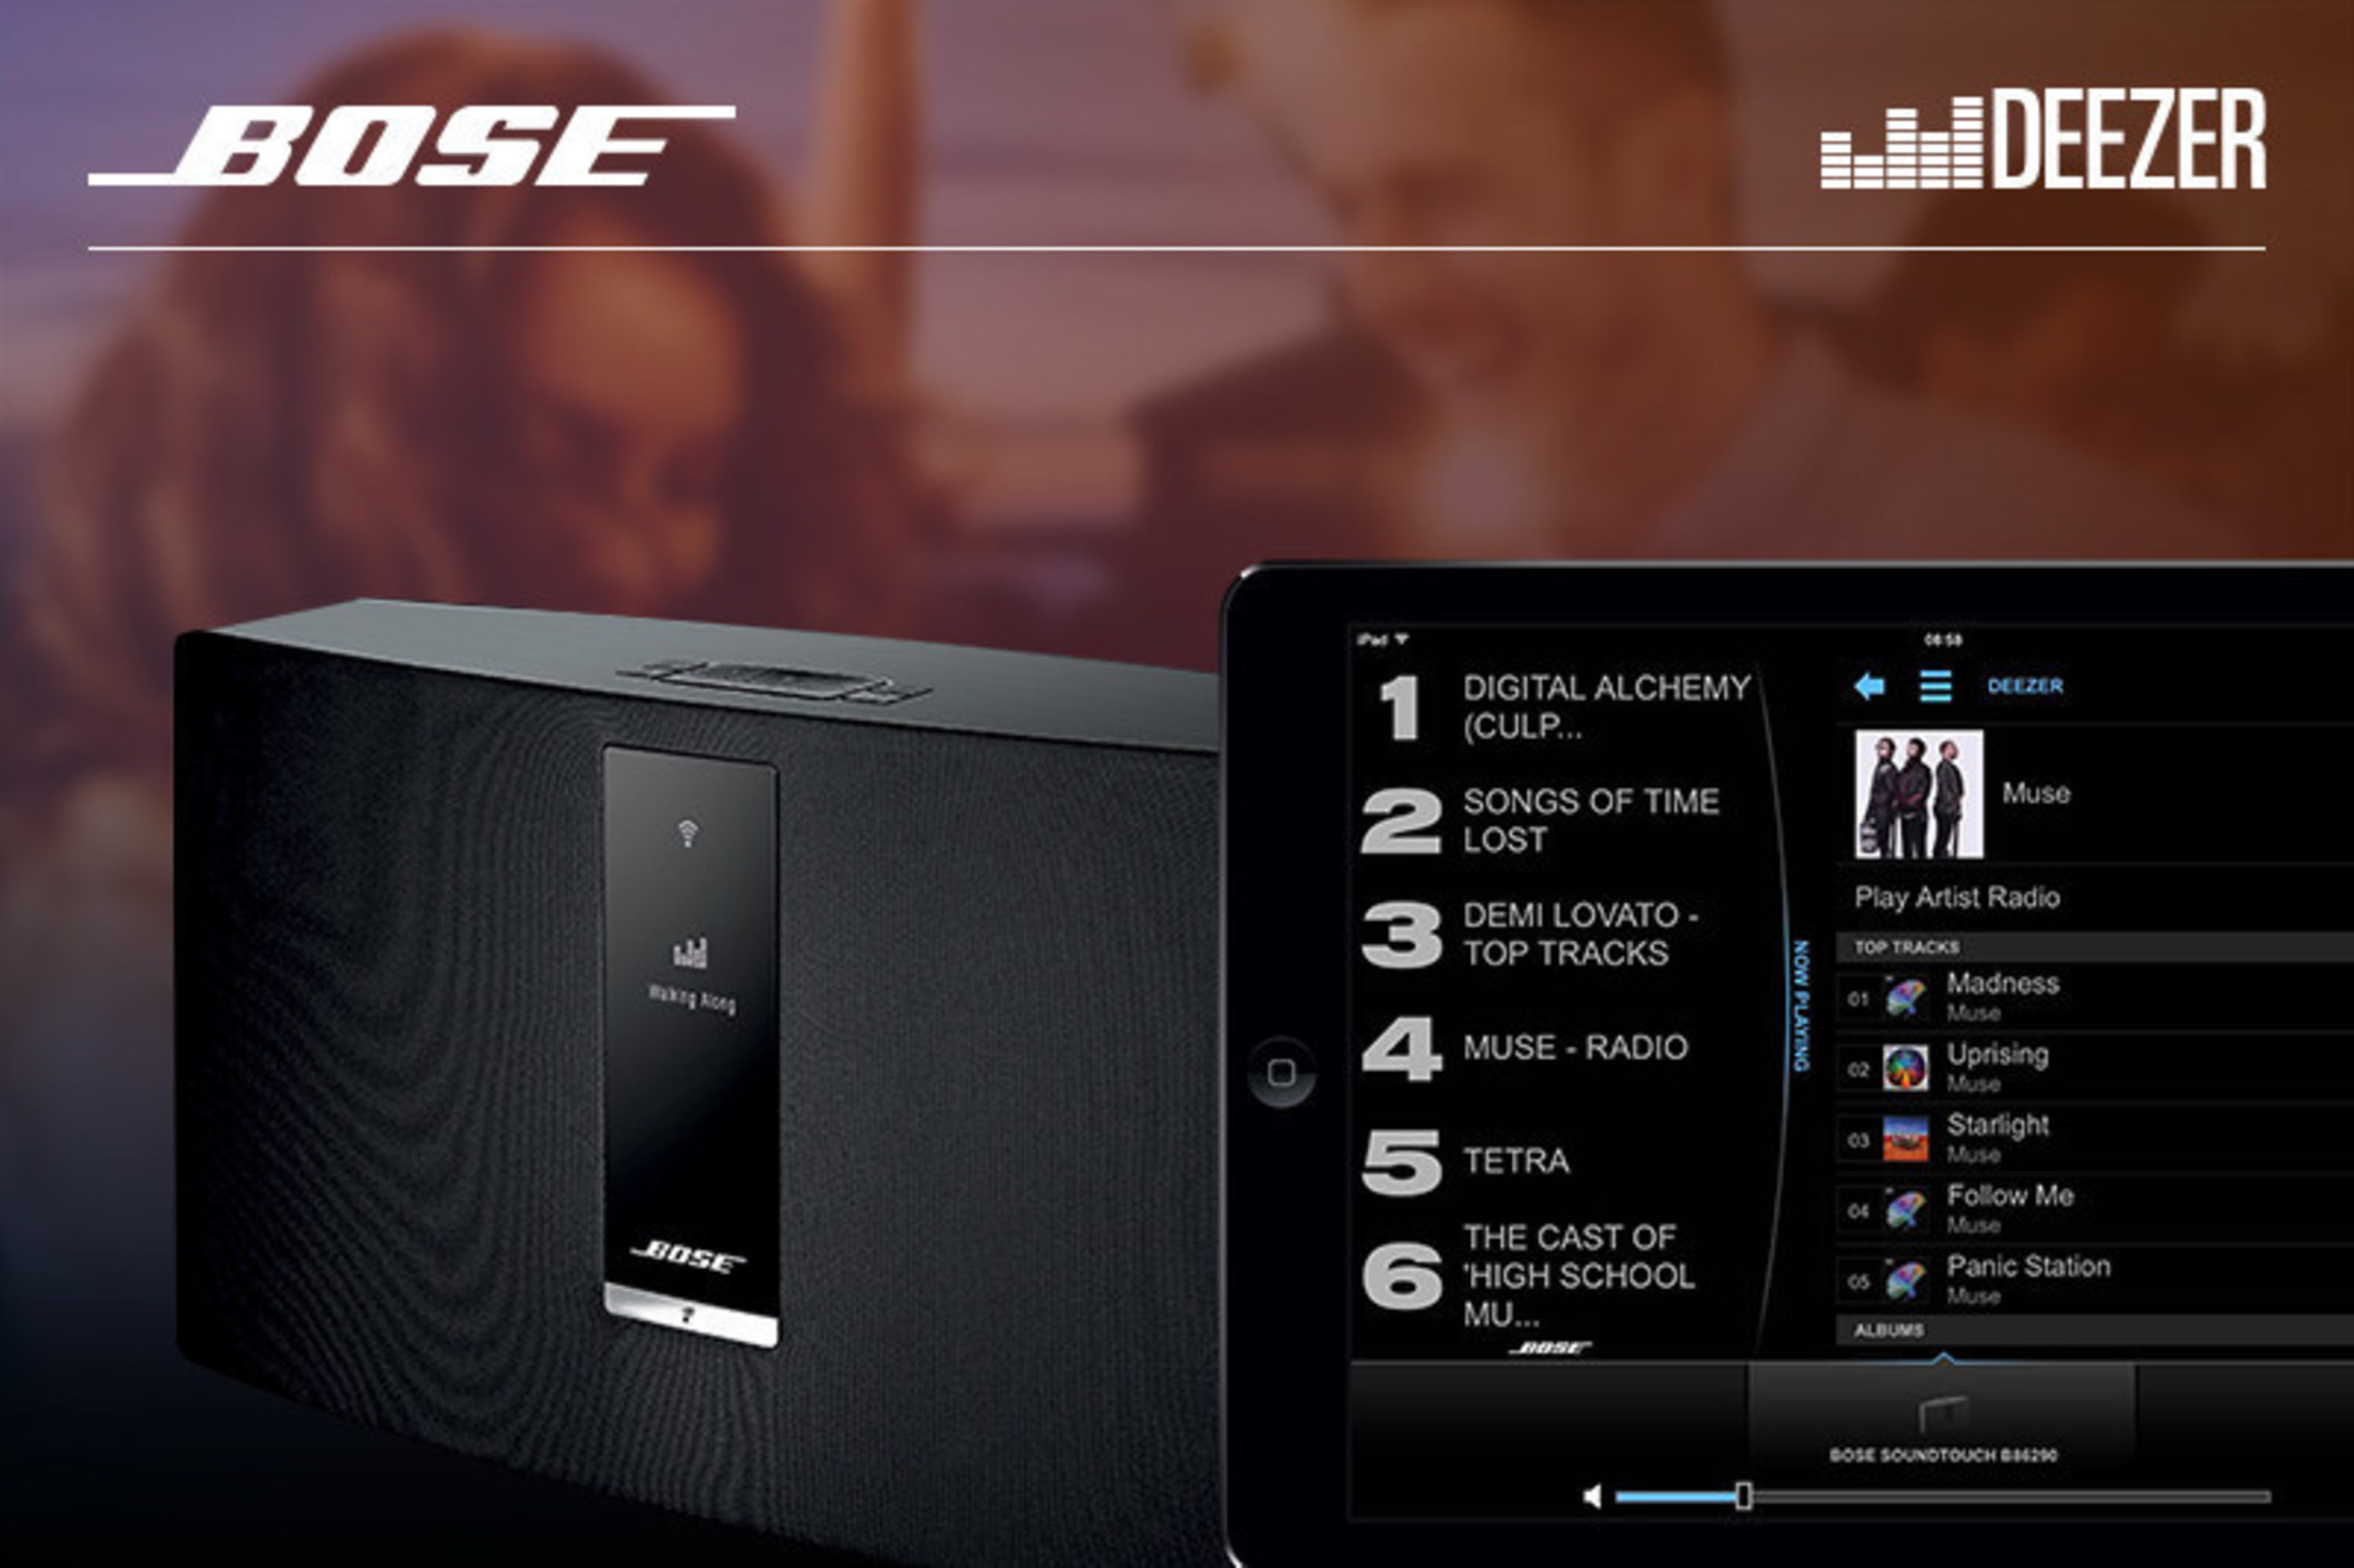 Deezer Brings Deezer Premium Plus to U.S. Music Fans for the First Time Through Bose Products (PRNewsFoto/Deezer)